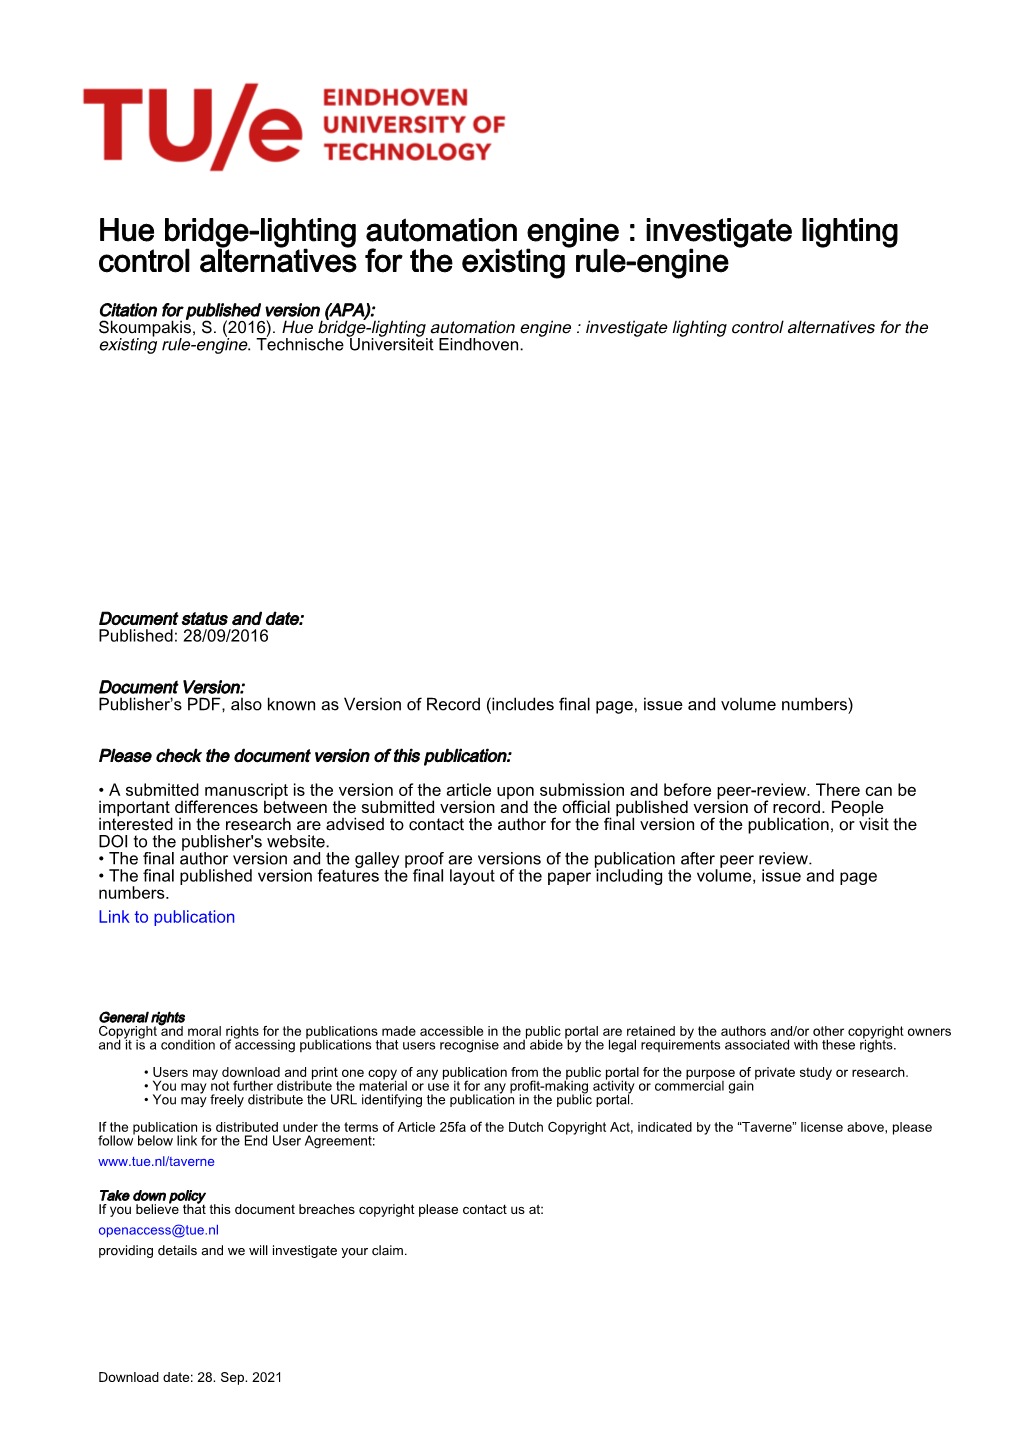 Hue Bridge-Lighting Automation Engine : Investigate Lighting Control Alternatives for the Existing Rule-Engine